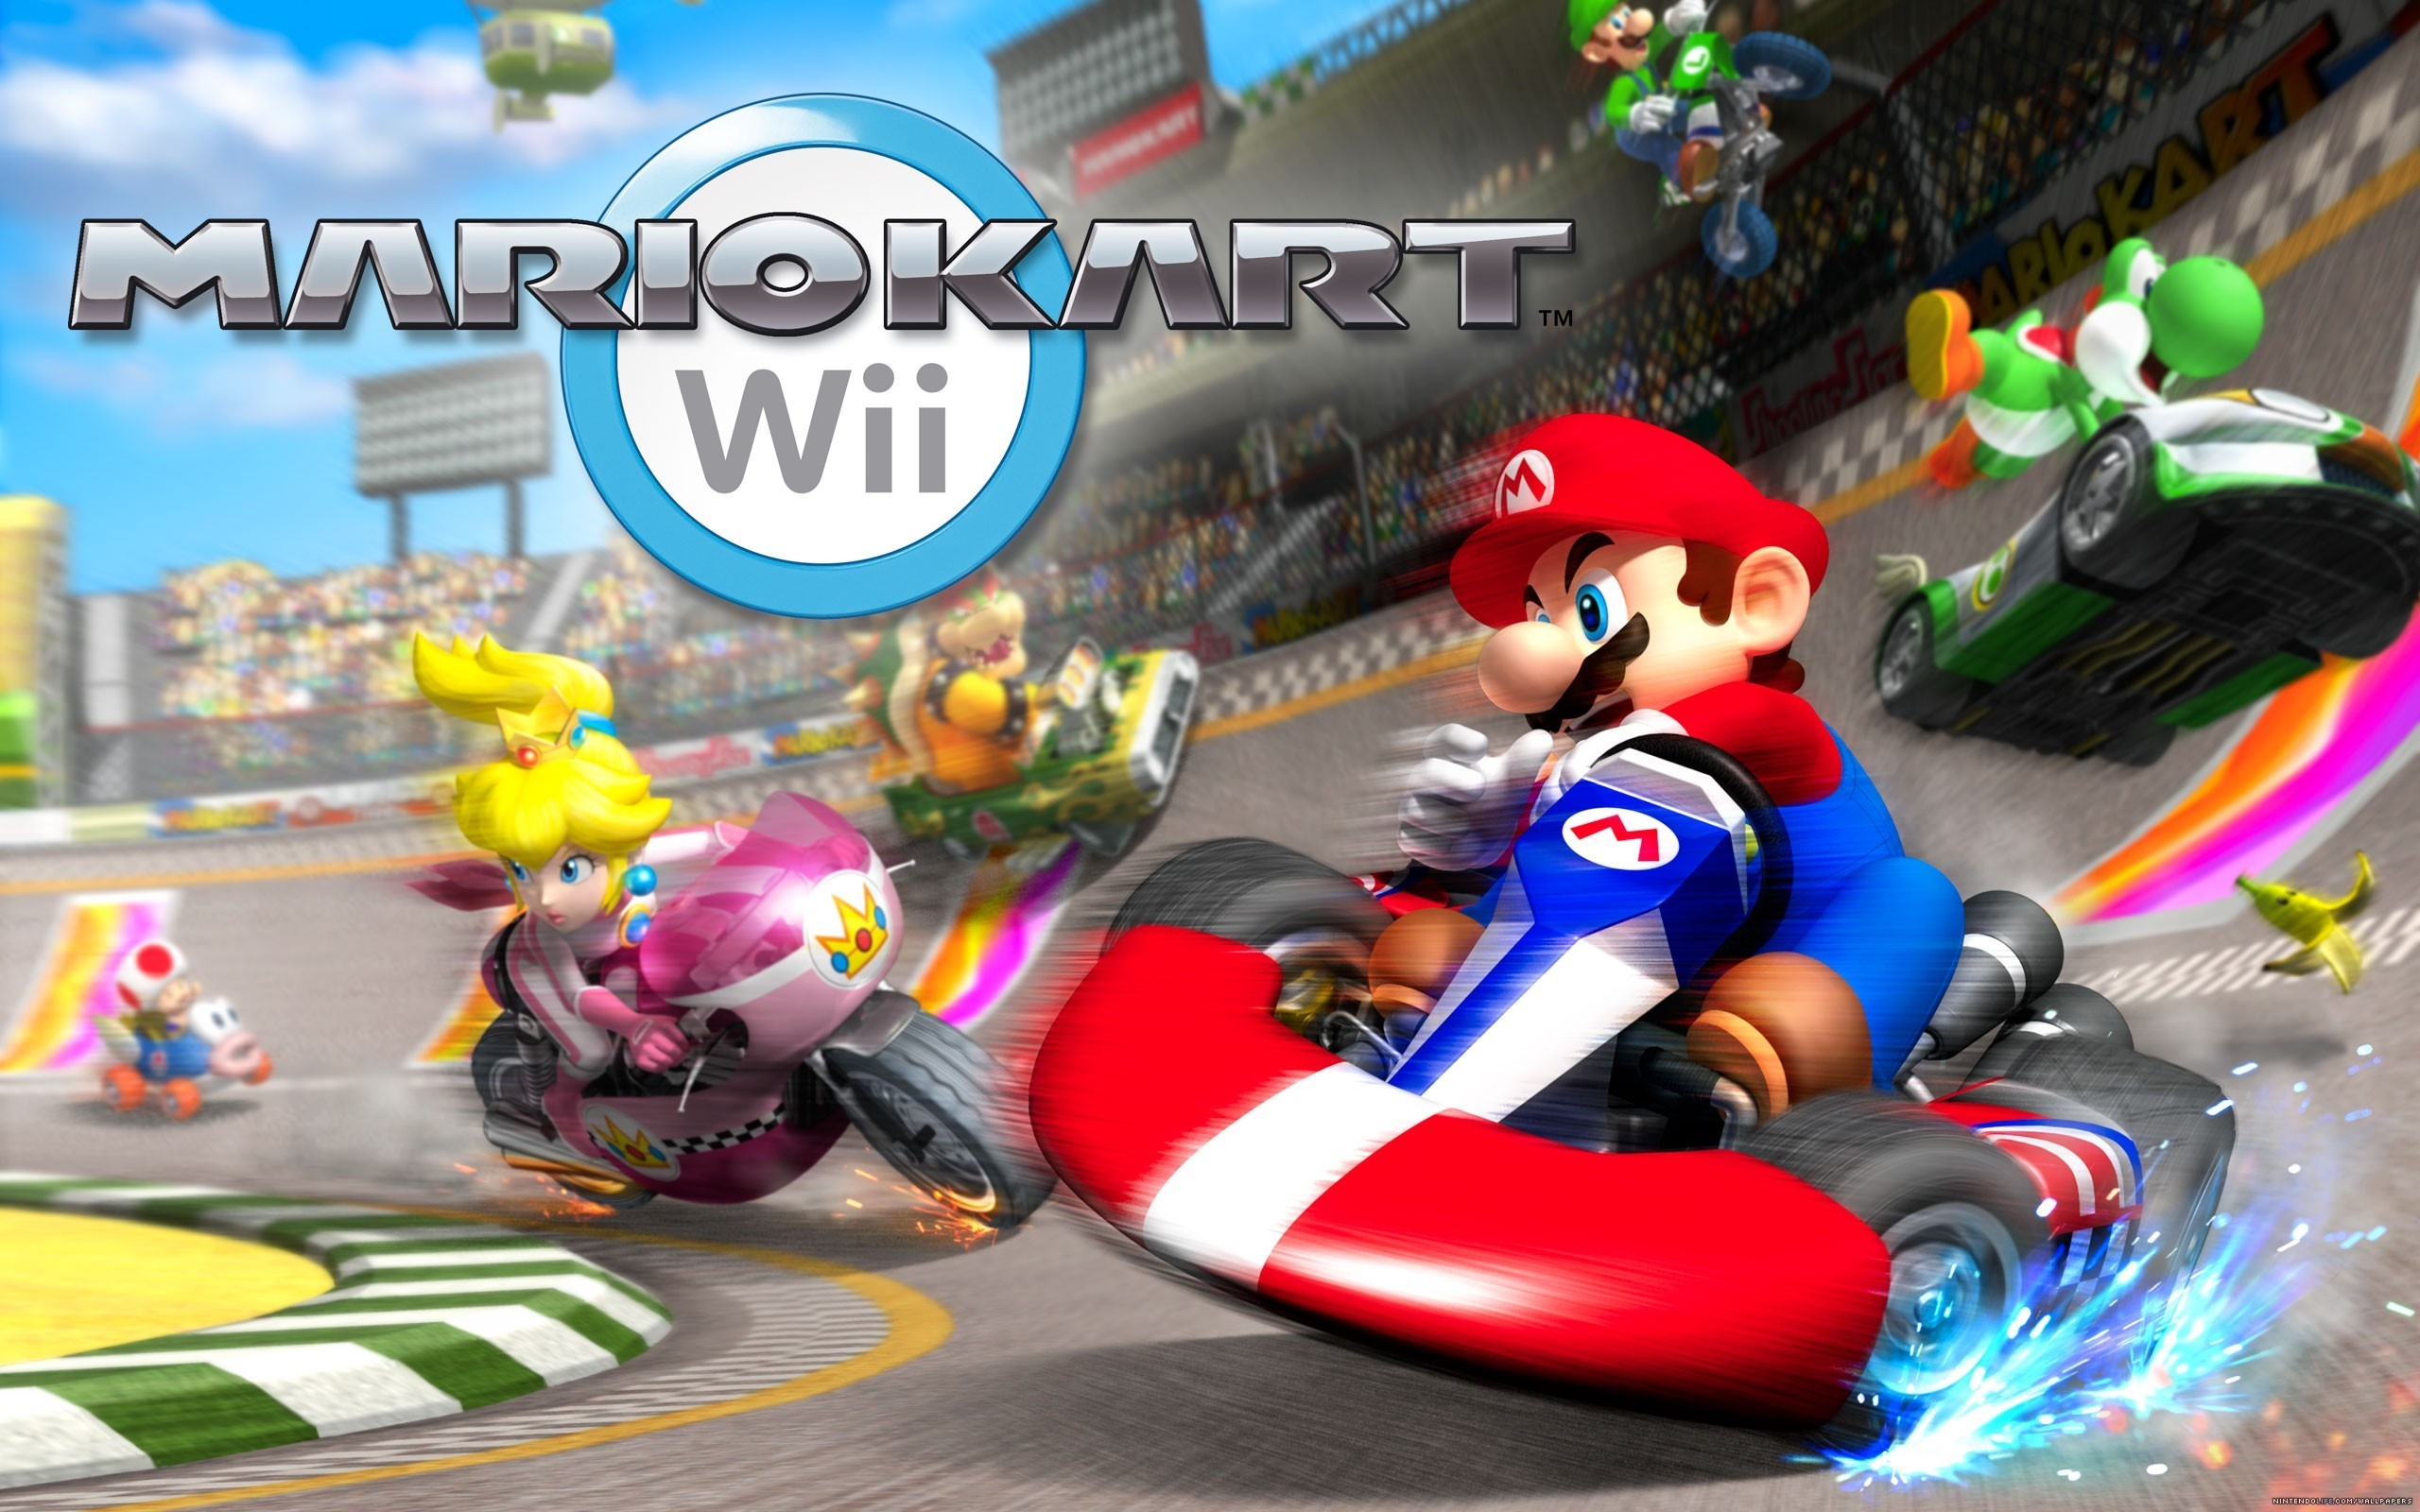 Mario Kart Wii for 2560 x 1600 widescreen resolution